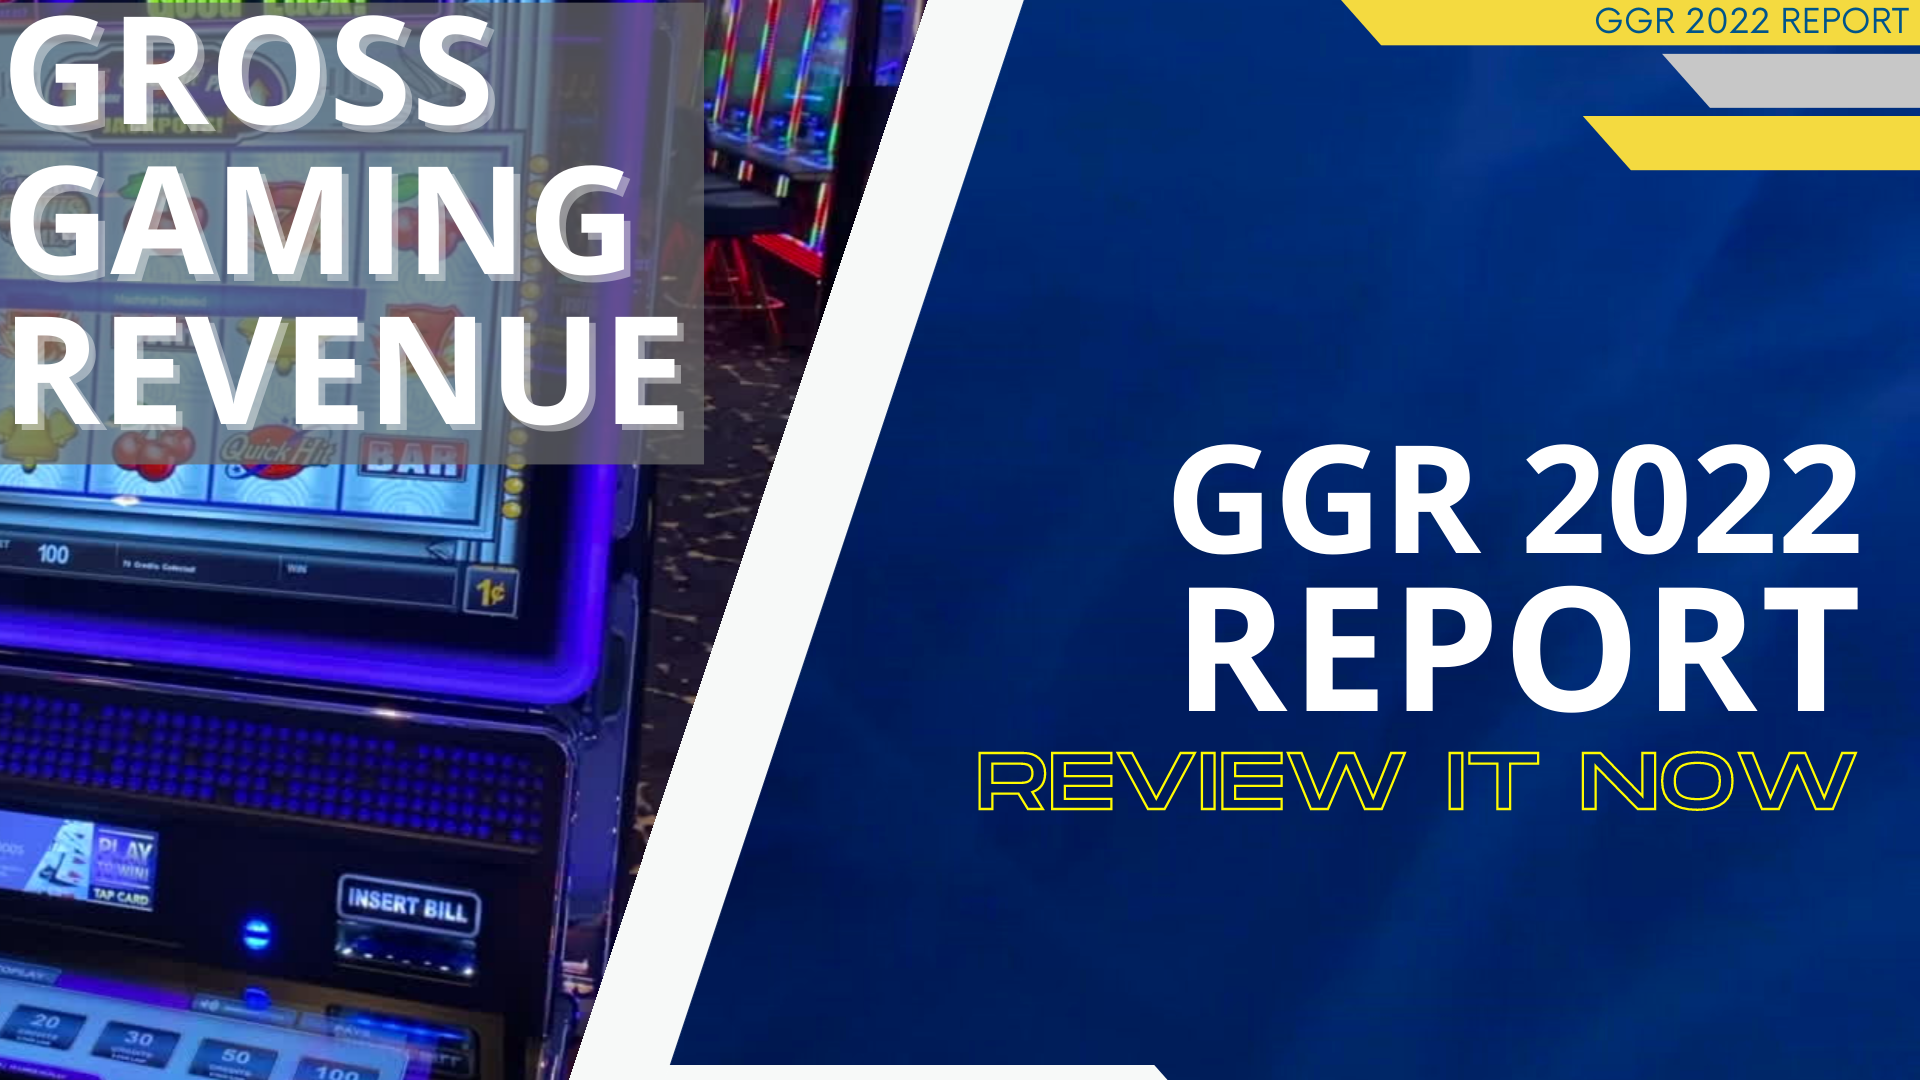 FY 2022 Gross Gaming Revenue Report